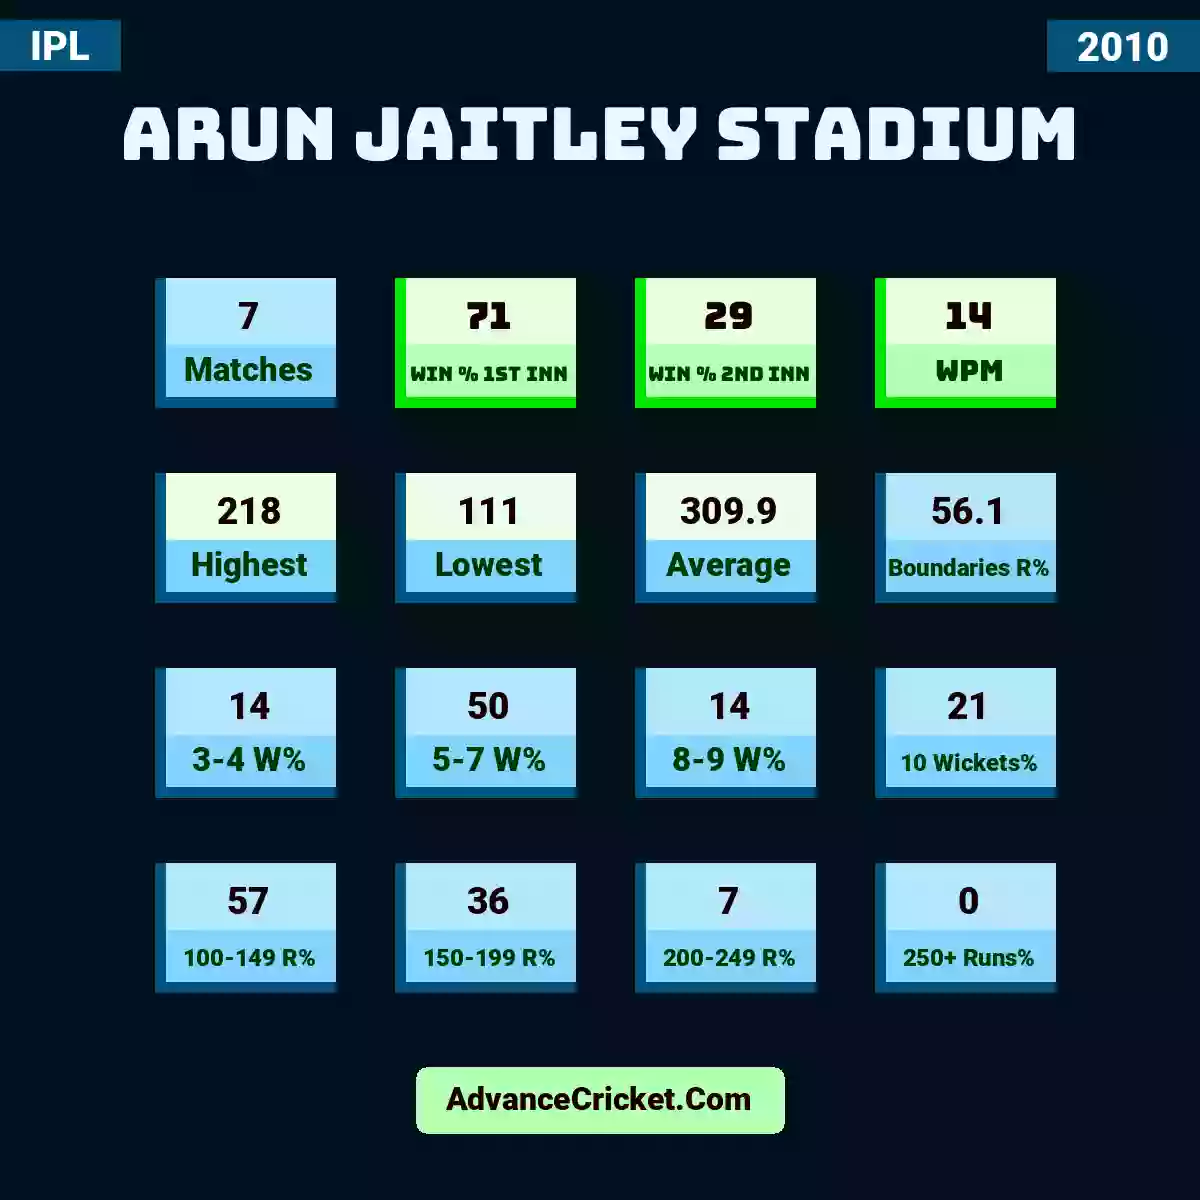 Image showing Arun Jaitley Stadium with Matches: 7, Win % 1st Inn: 71, Win % 2nd Inn: 29, WPM: 14, Highest: 218, Lowest: 111, Average: 309.9, Boundaries R%: 56.1, 3-4 W%: 14, 5-7 W%: 50, 8-9 W%: 14, 10 Wickets%: 21, 100-149 R%: 57, 150-199 R%: 36, 200-249 R%: 7, 250+ Runs%: 0.